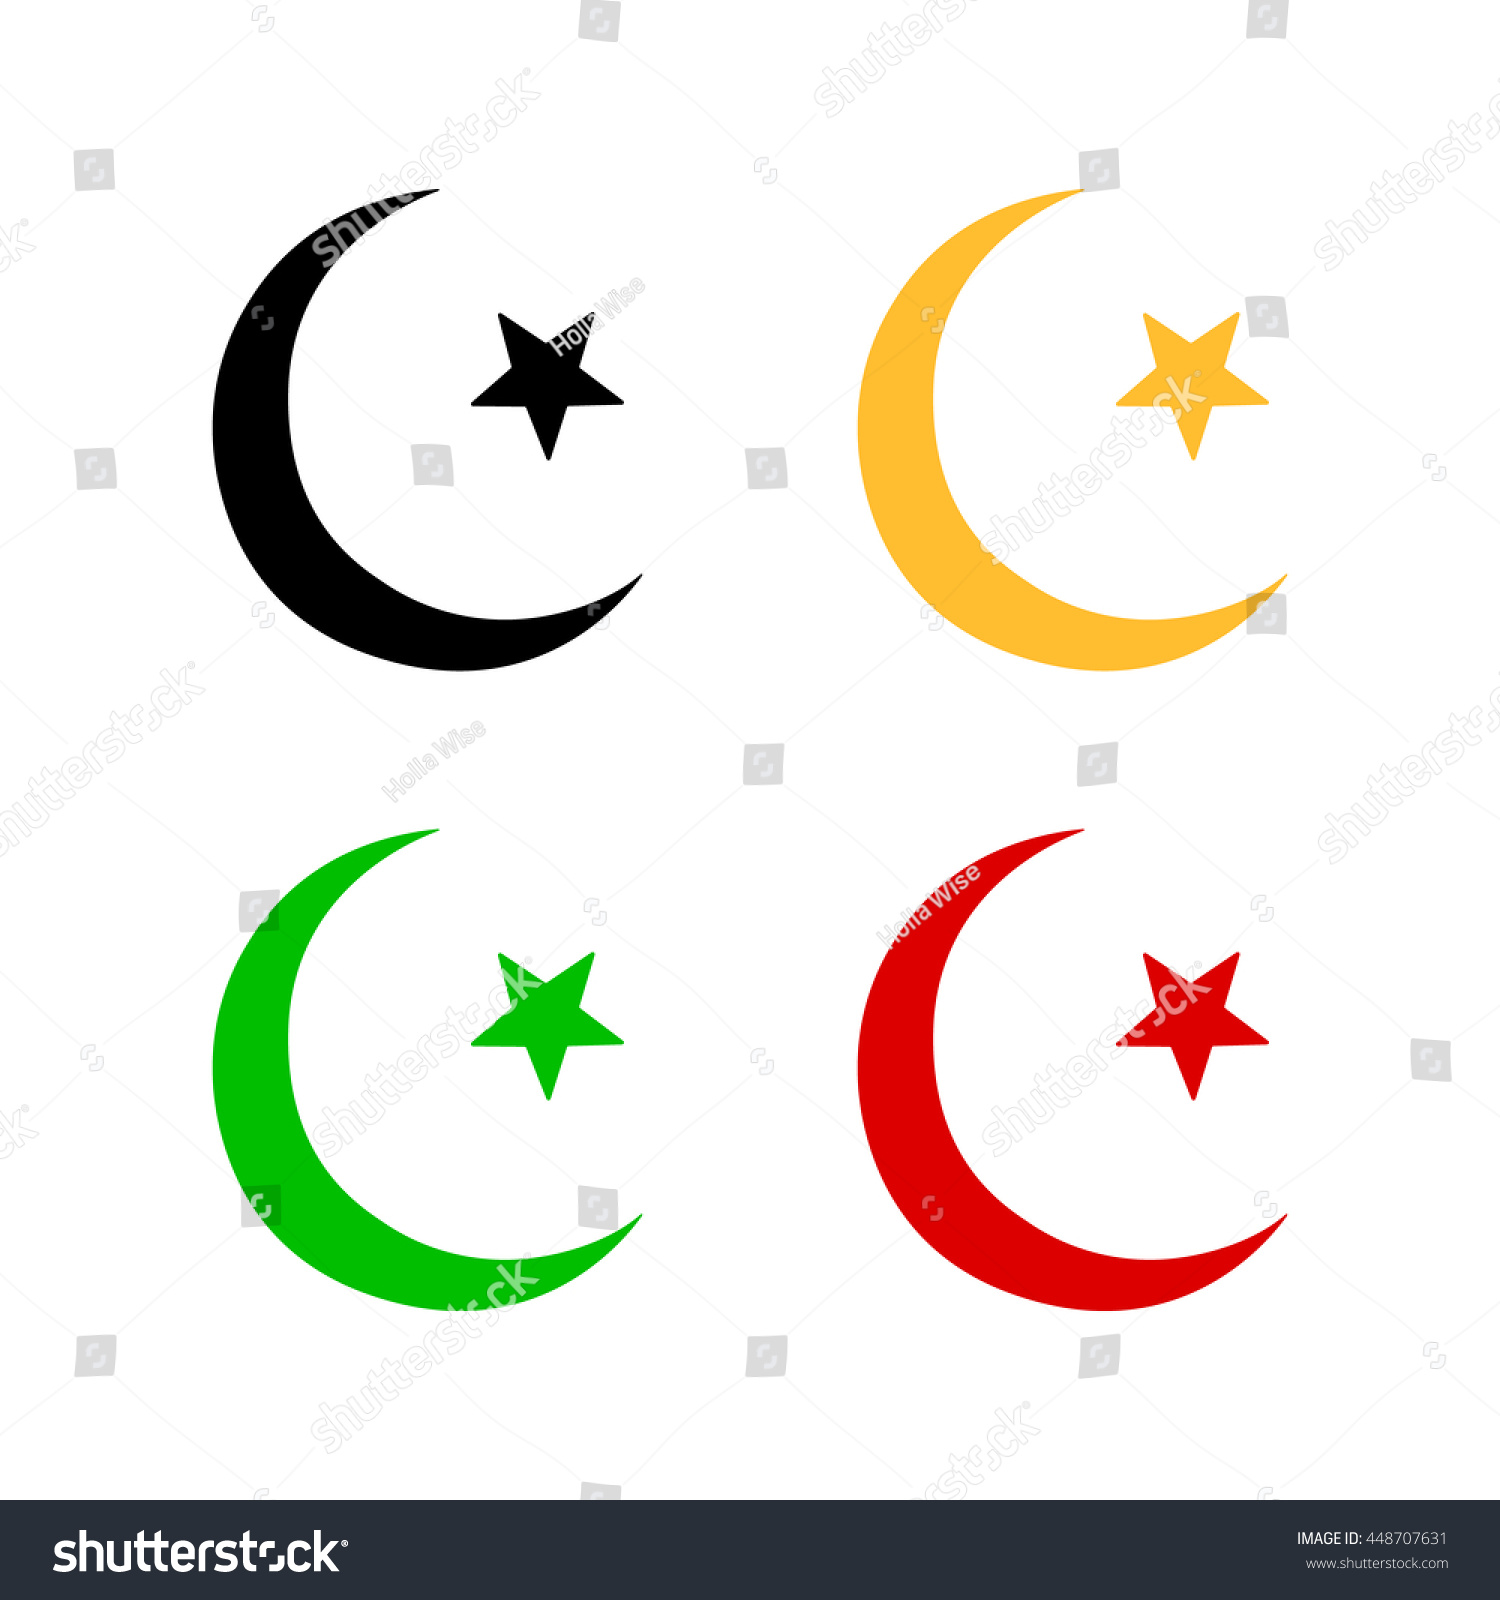 Зеленый флаг с луной. Зелено белый флаг с полумесяцем и звездой. Флаг с полумесяцем и звездой. Полумесяц и звезда на зеленом фоне. Мусульманский флаг с полумесяцем и звездой.